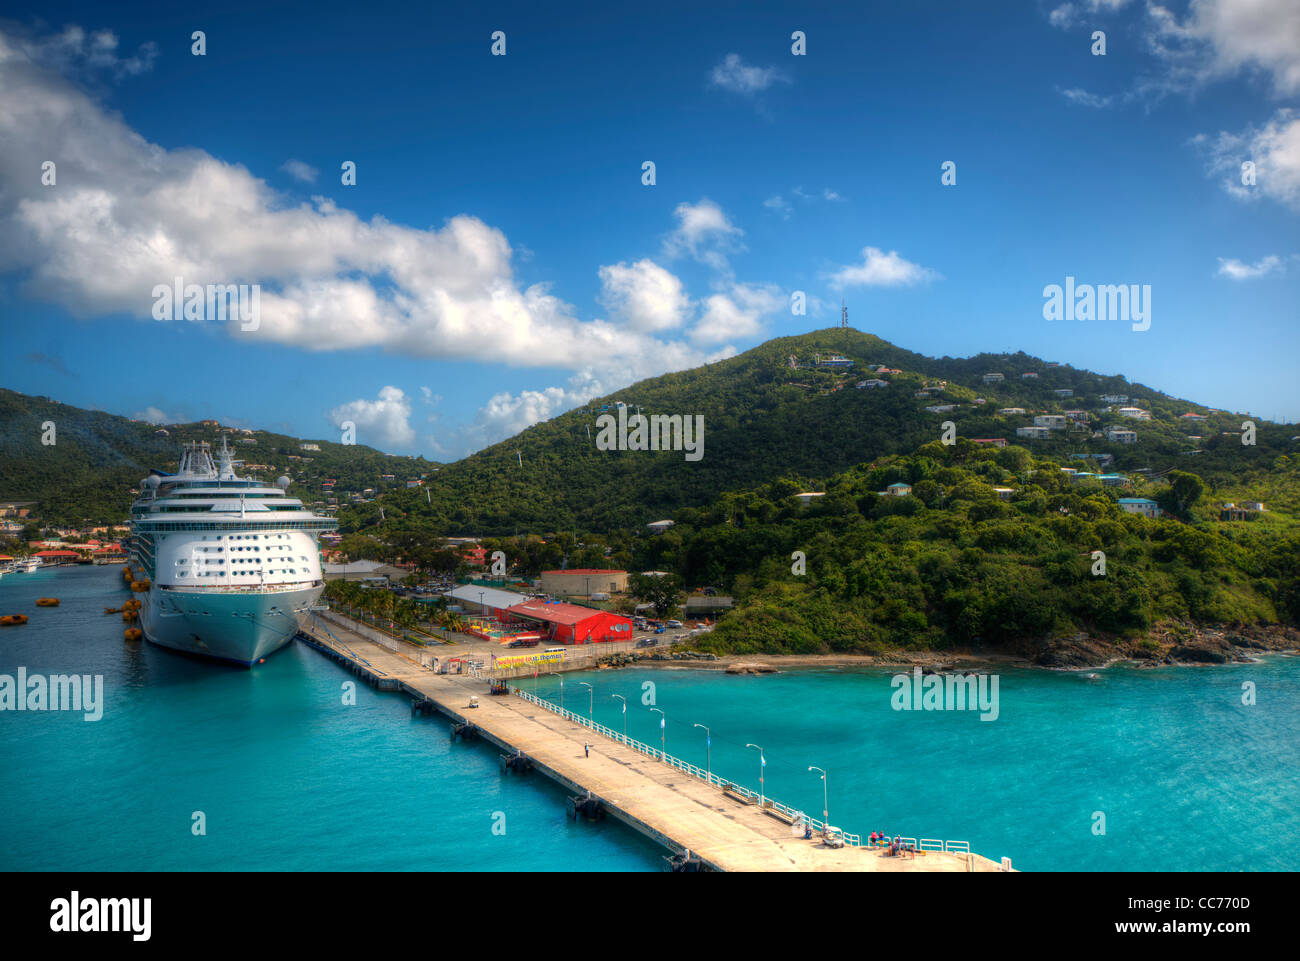 Port at St. Thomas, U.S. Virgin Islands. Stock Photo